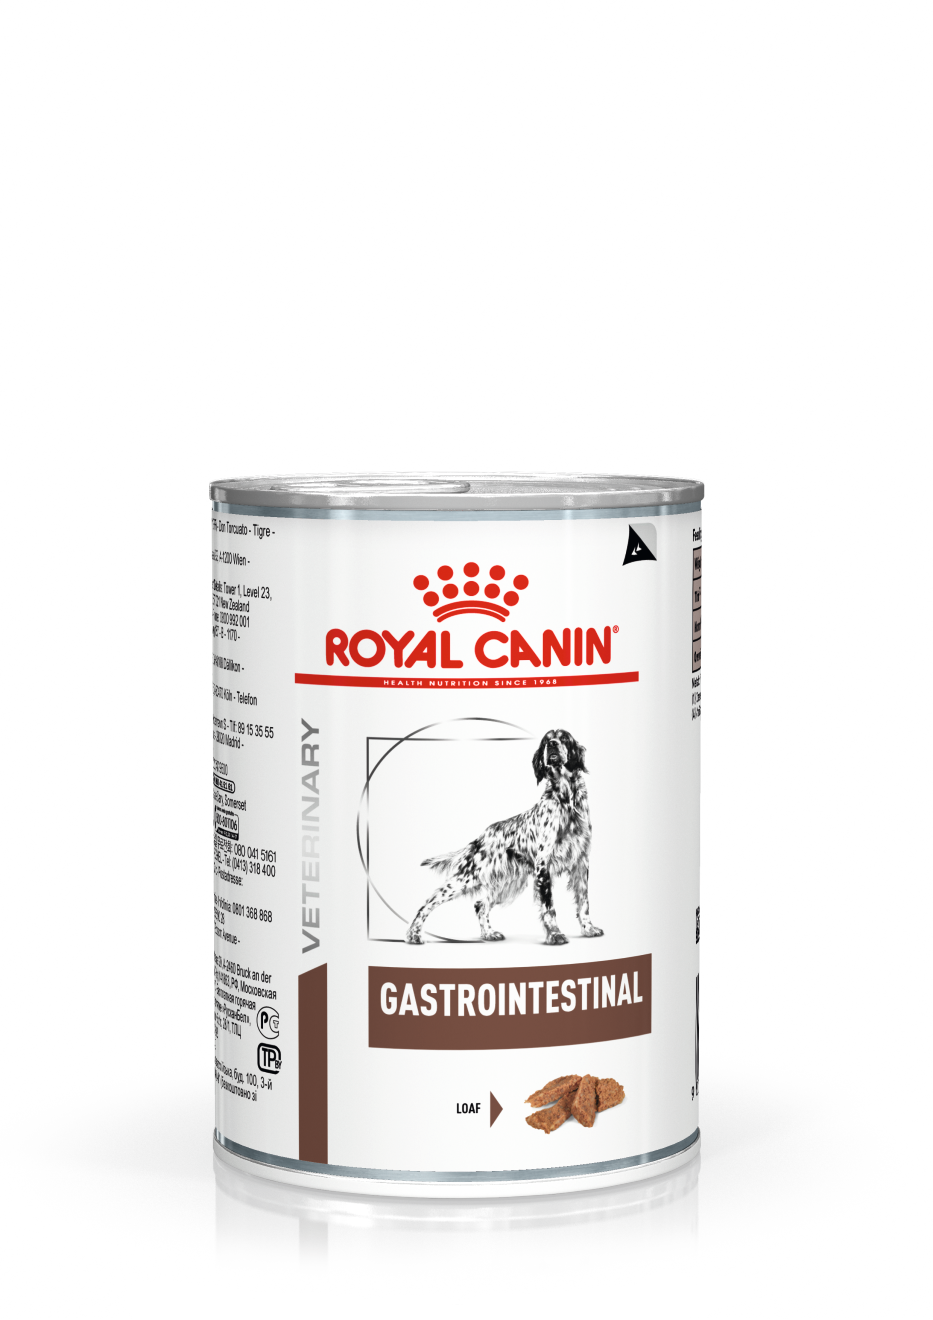 Royal Canin - Gastrointestinal Dog